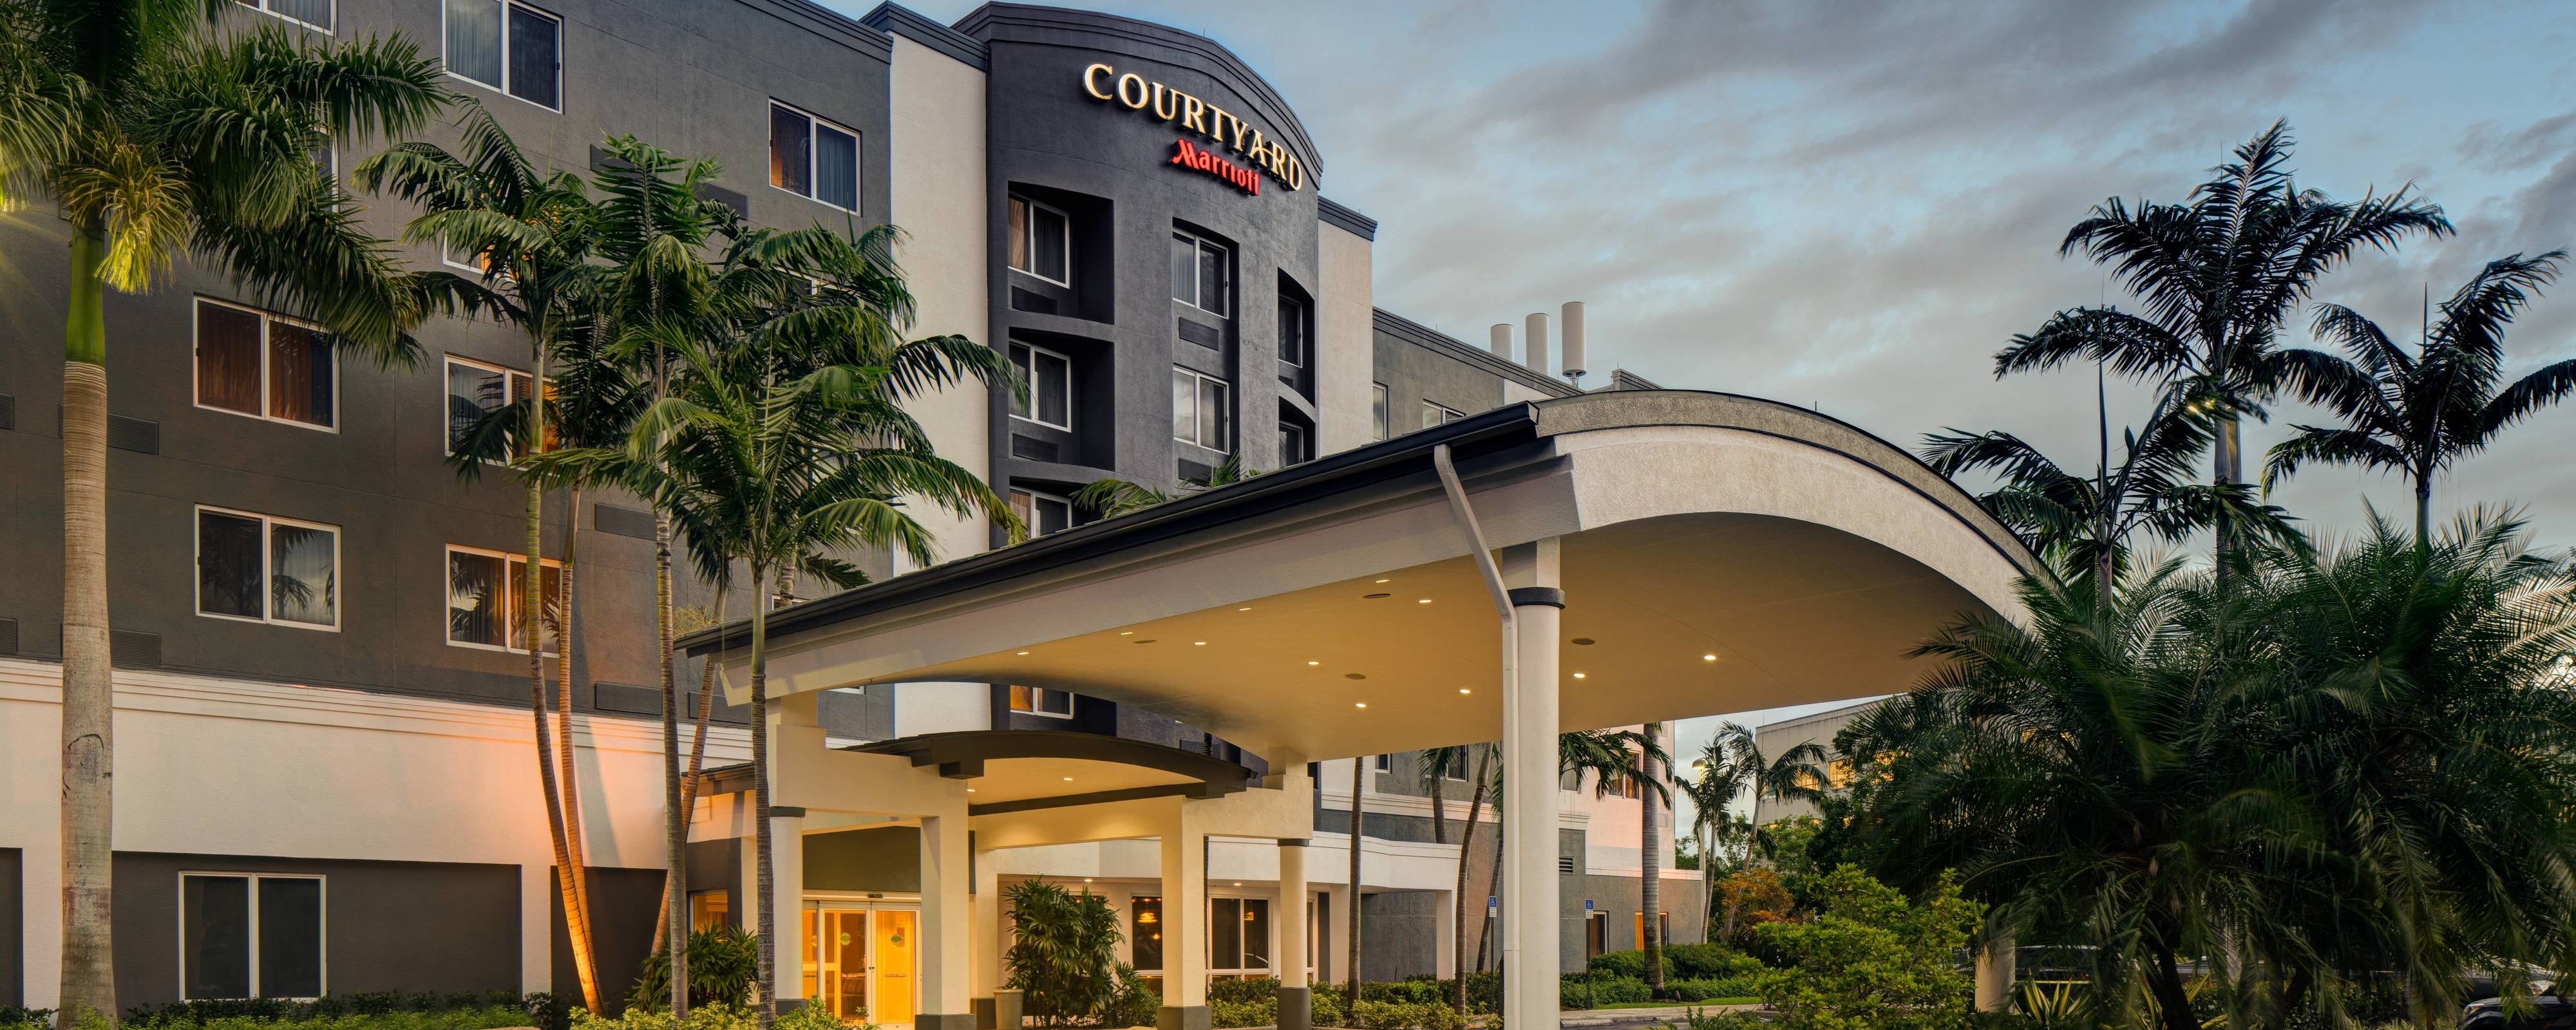 West Miami Hotels in Doral, Florida | Courtyard Miami West/FL Turnpike